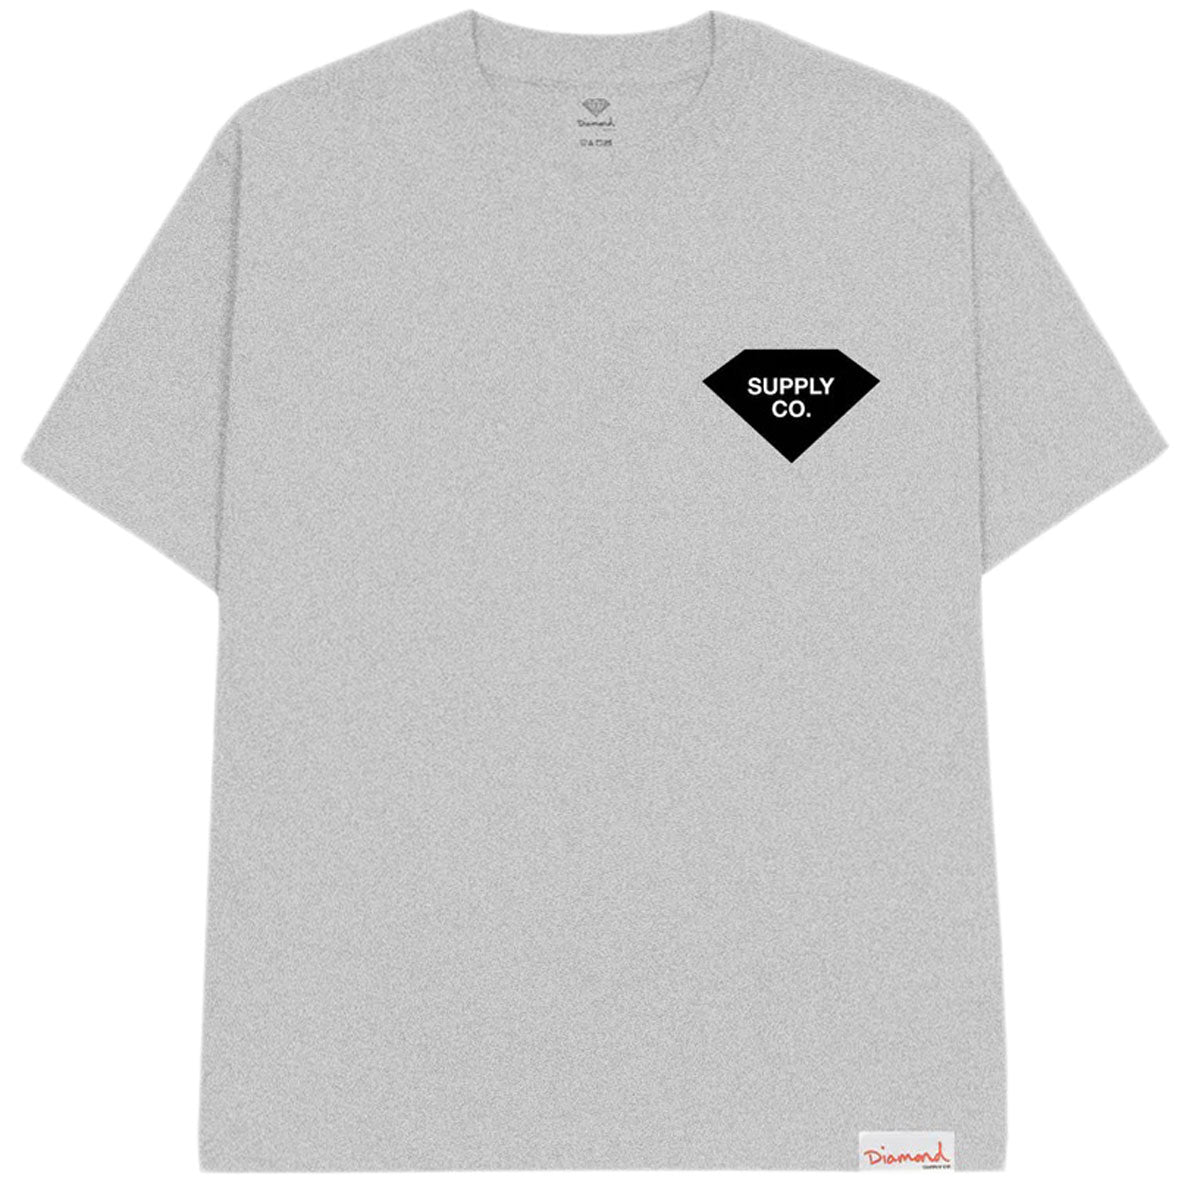 Diamond Supply Co. Silhouette Supply Co. T-Shirt - Heather Grey image 1